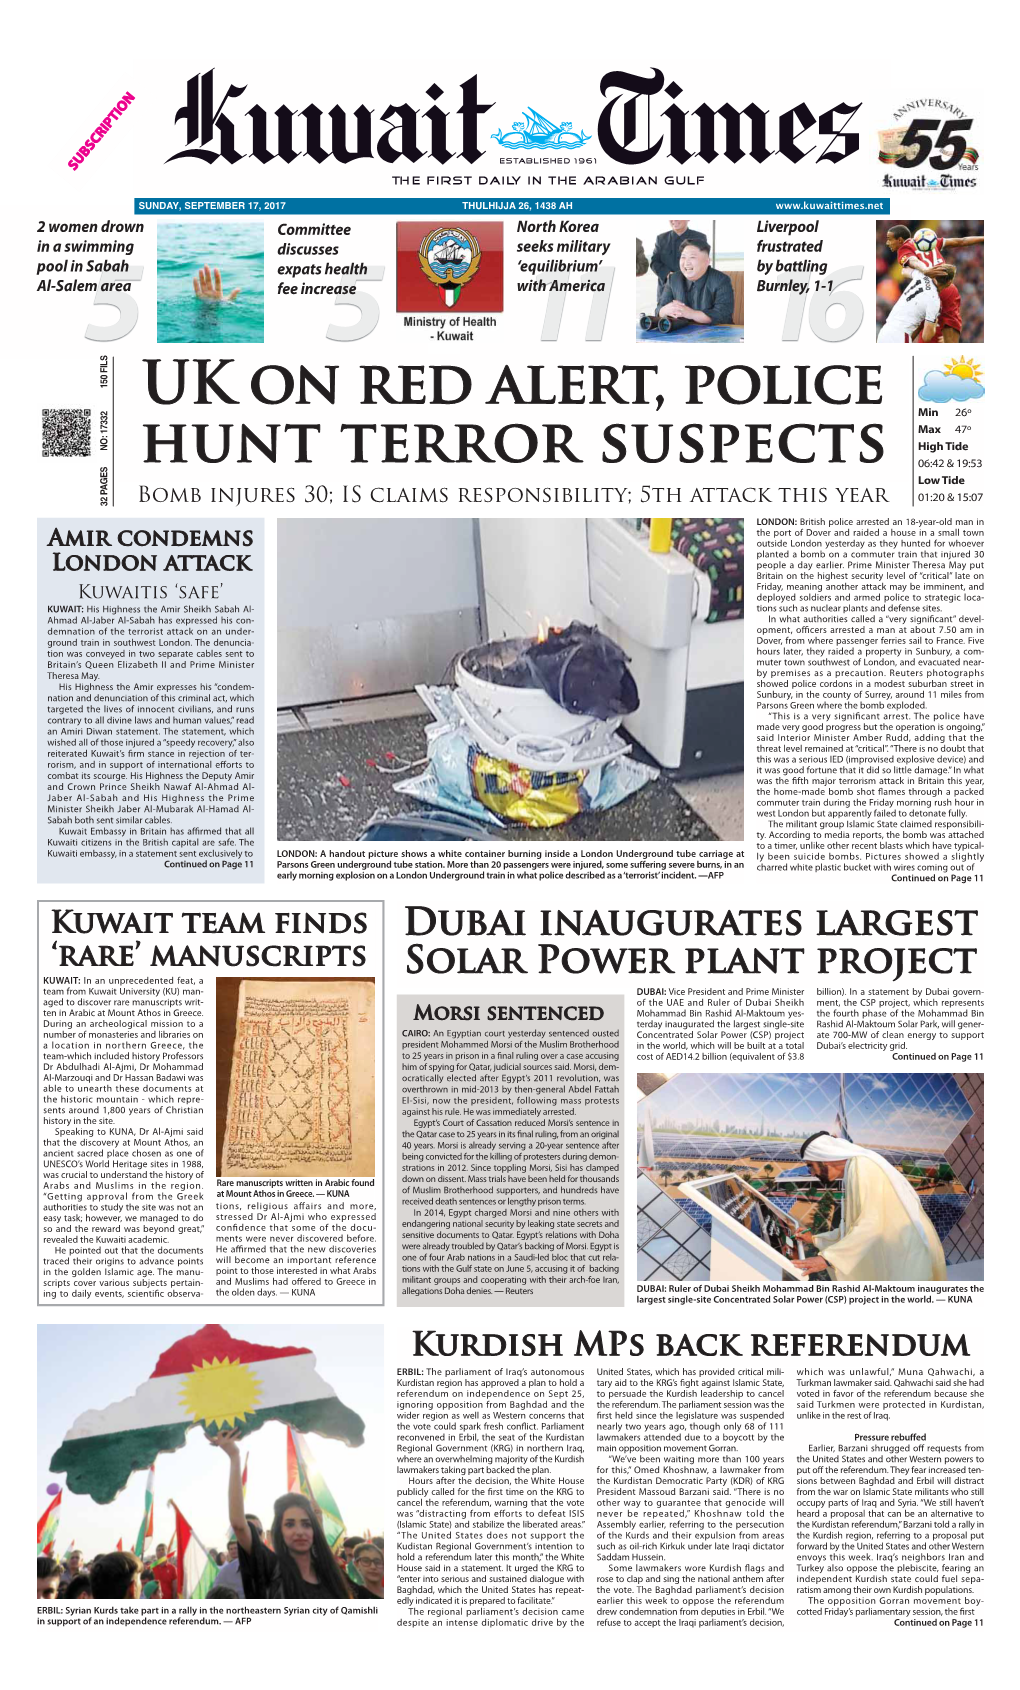 UK on Red Alert, Police Hunt Terror Suspects